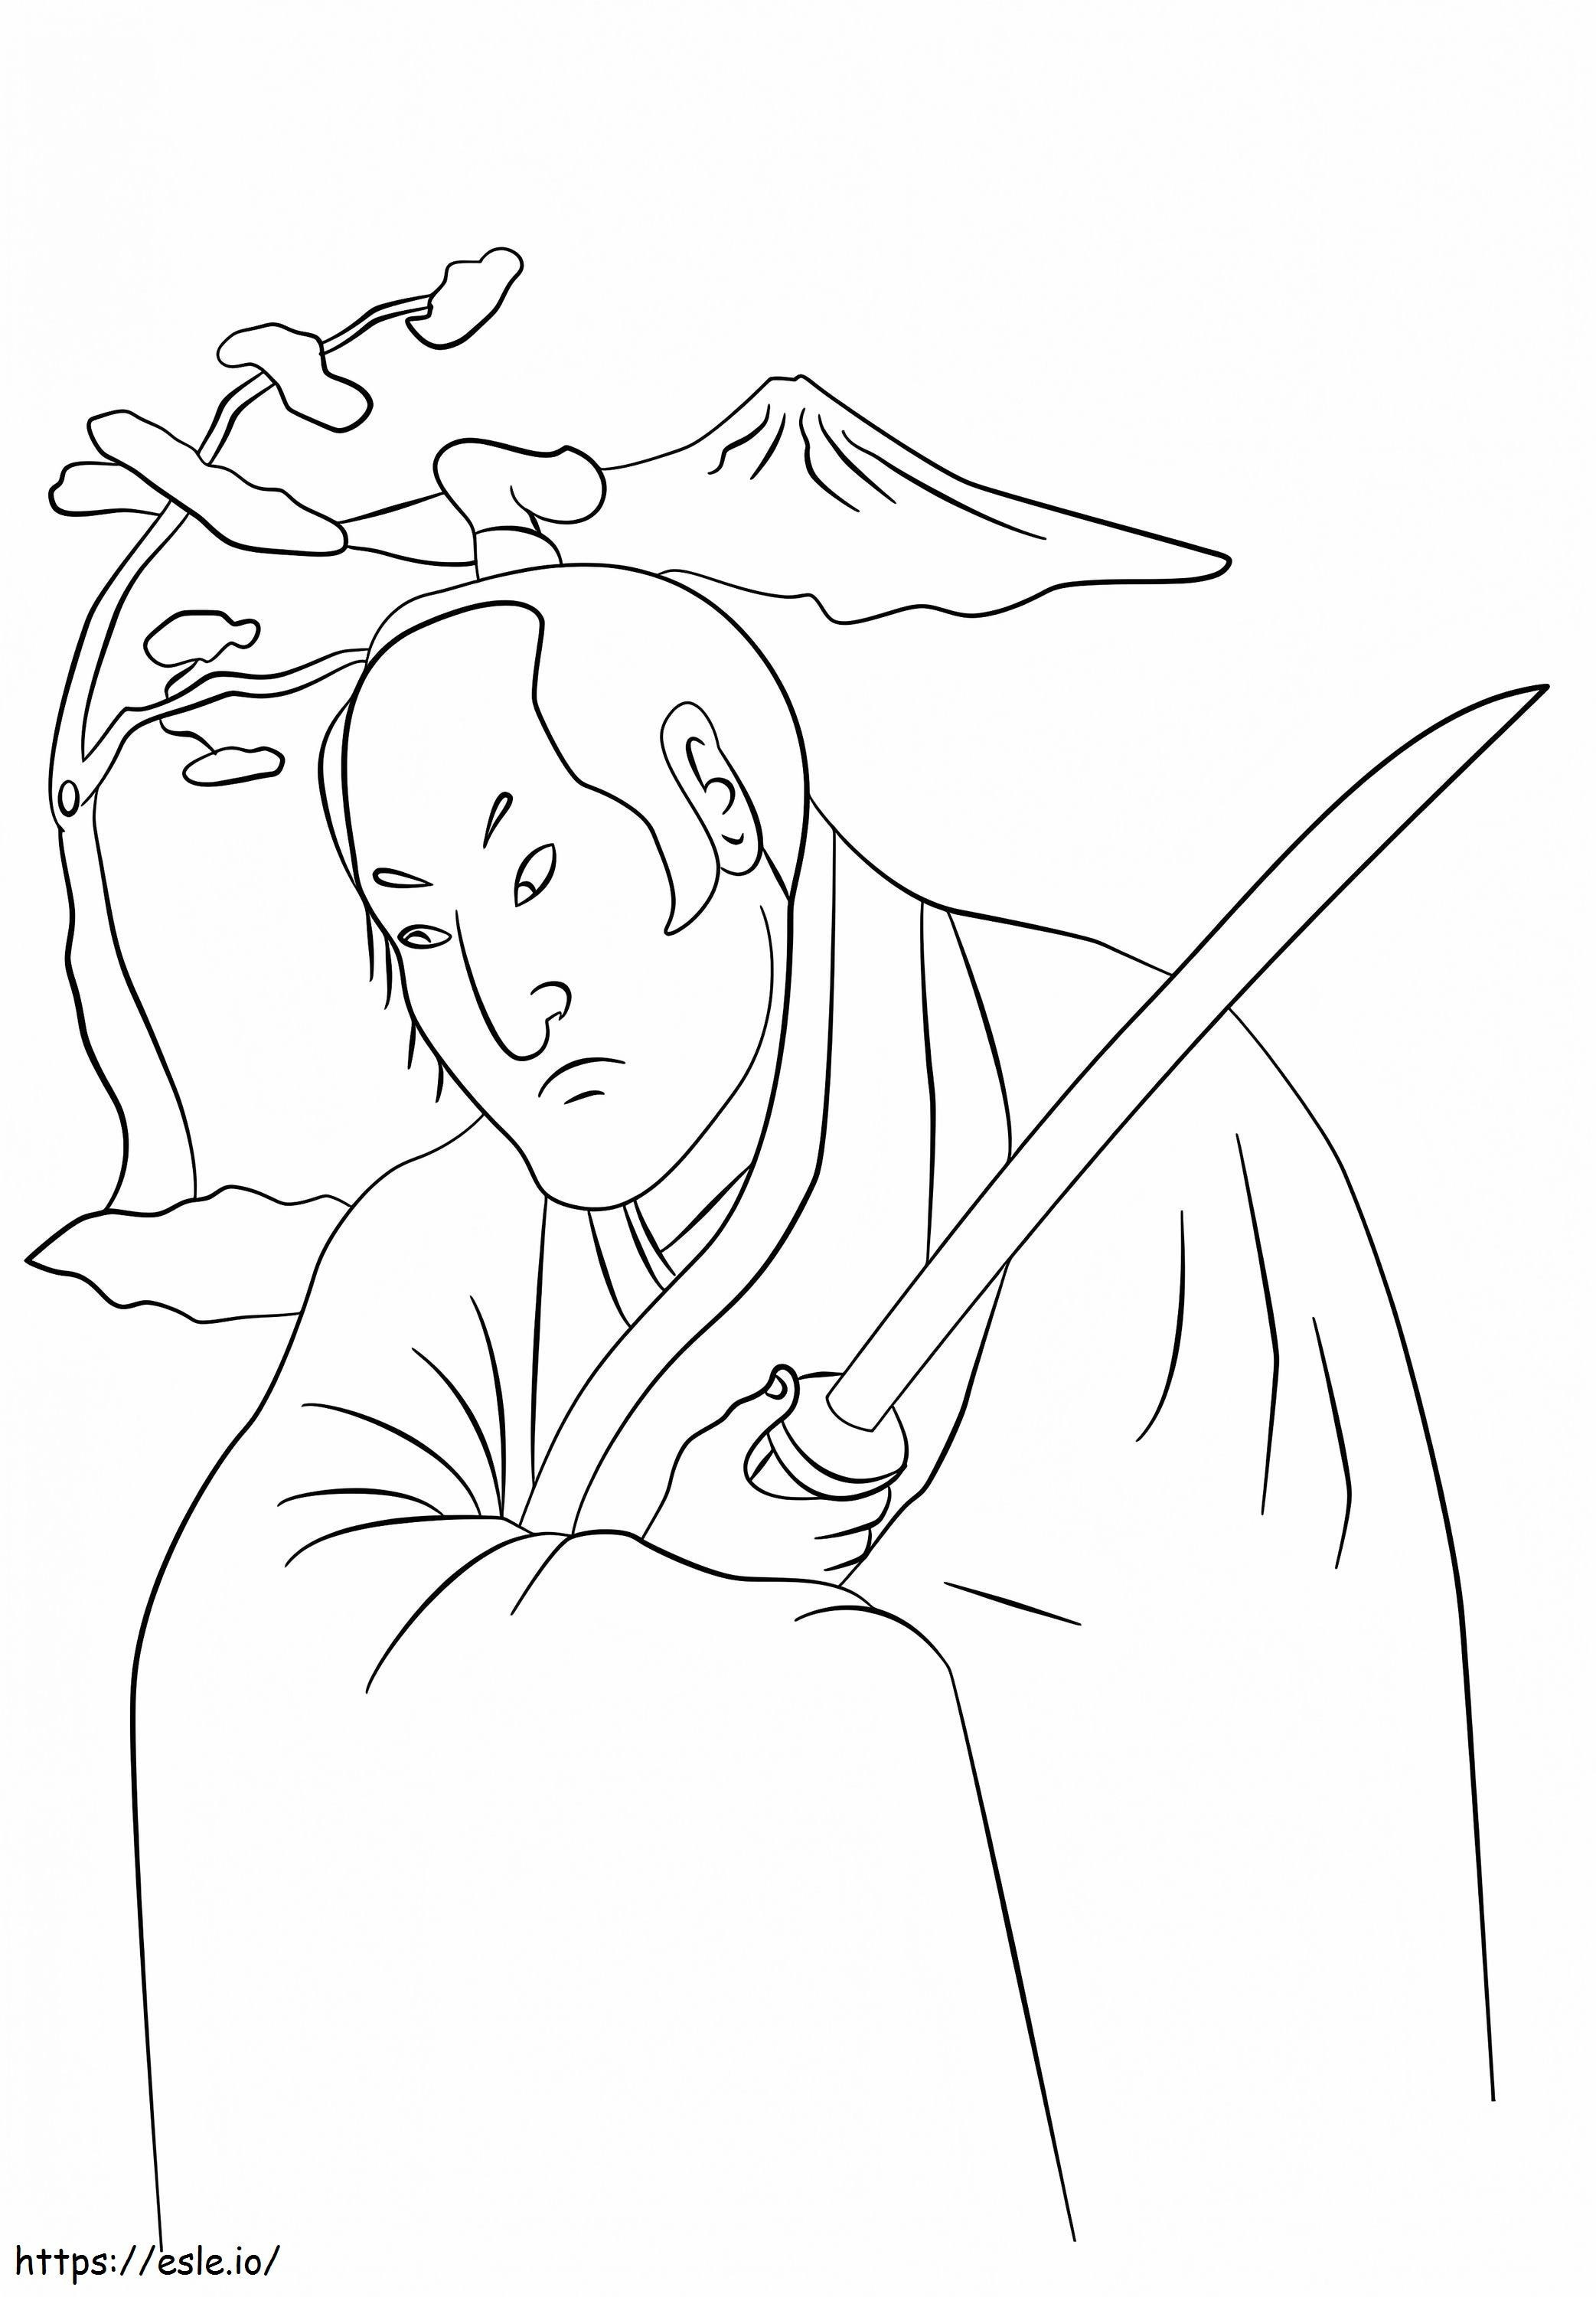 Prajurit Samurai Gambar Mewarnai